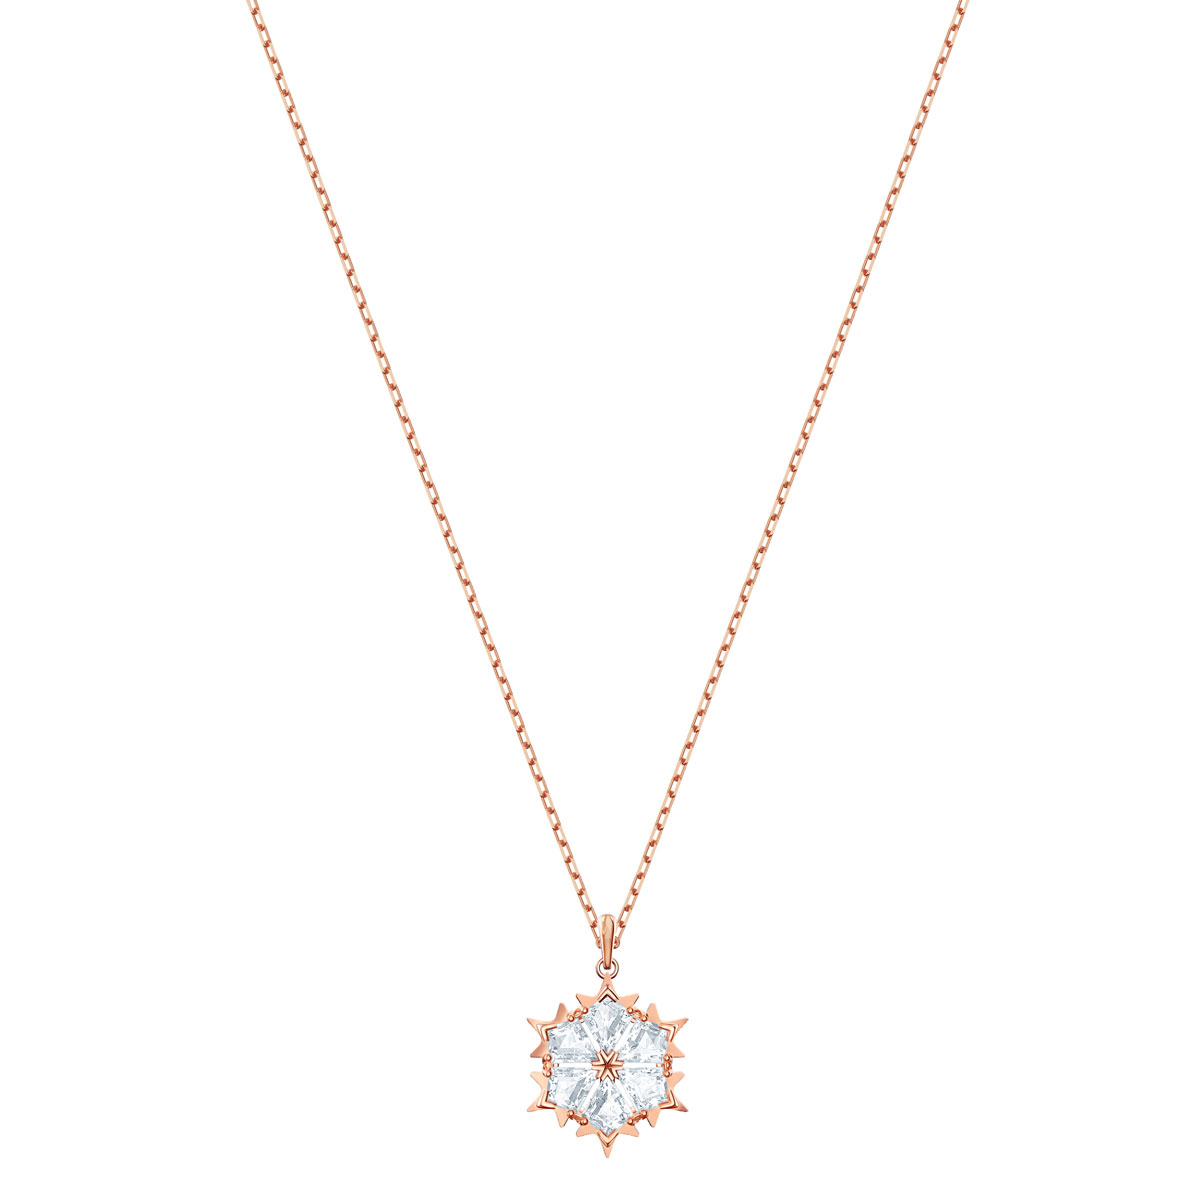 Swarovski White Crystal and Rose Gold Snowflake Pendant Necklace